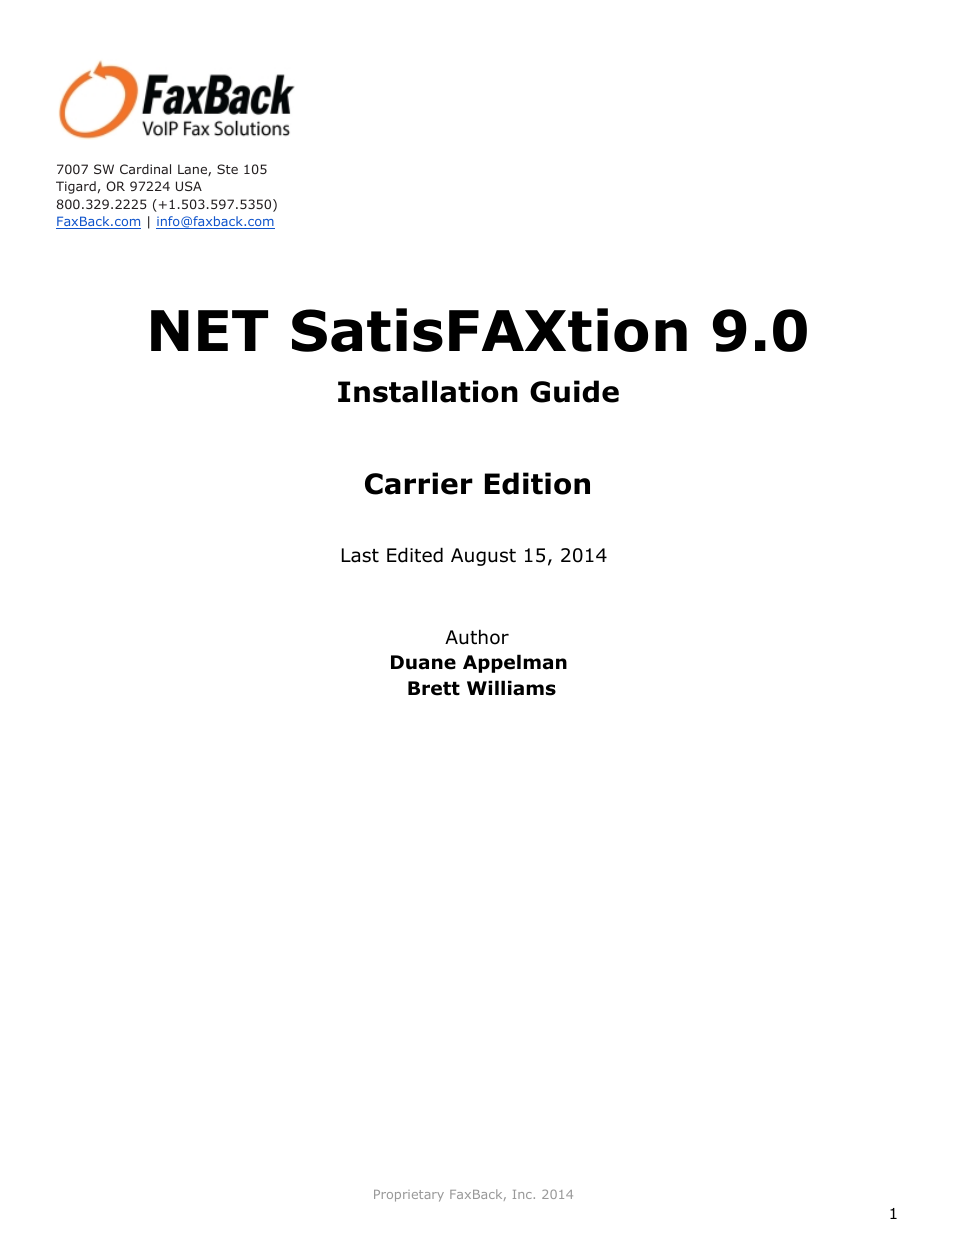 NET SatisFAXtion 9.0 - Installation Guide (Carrier Edition)